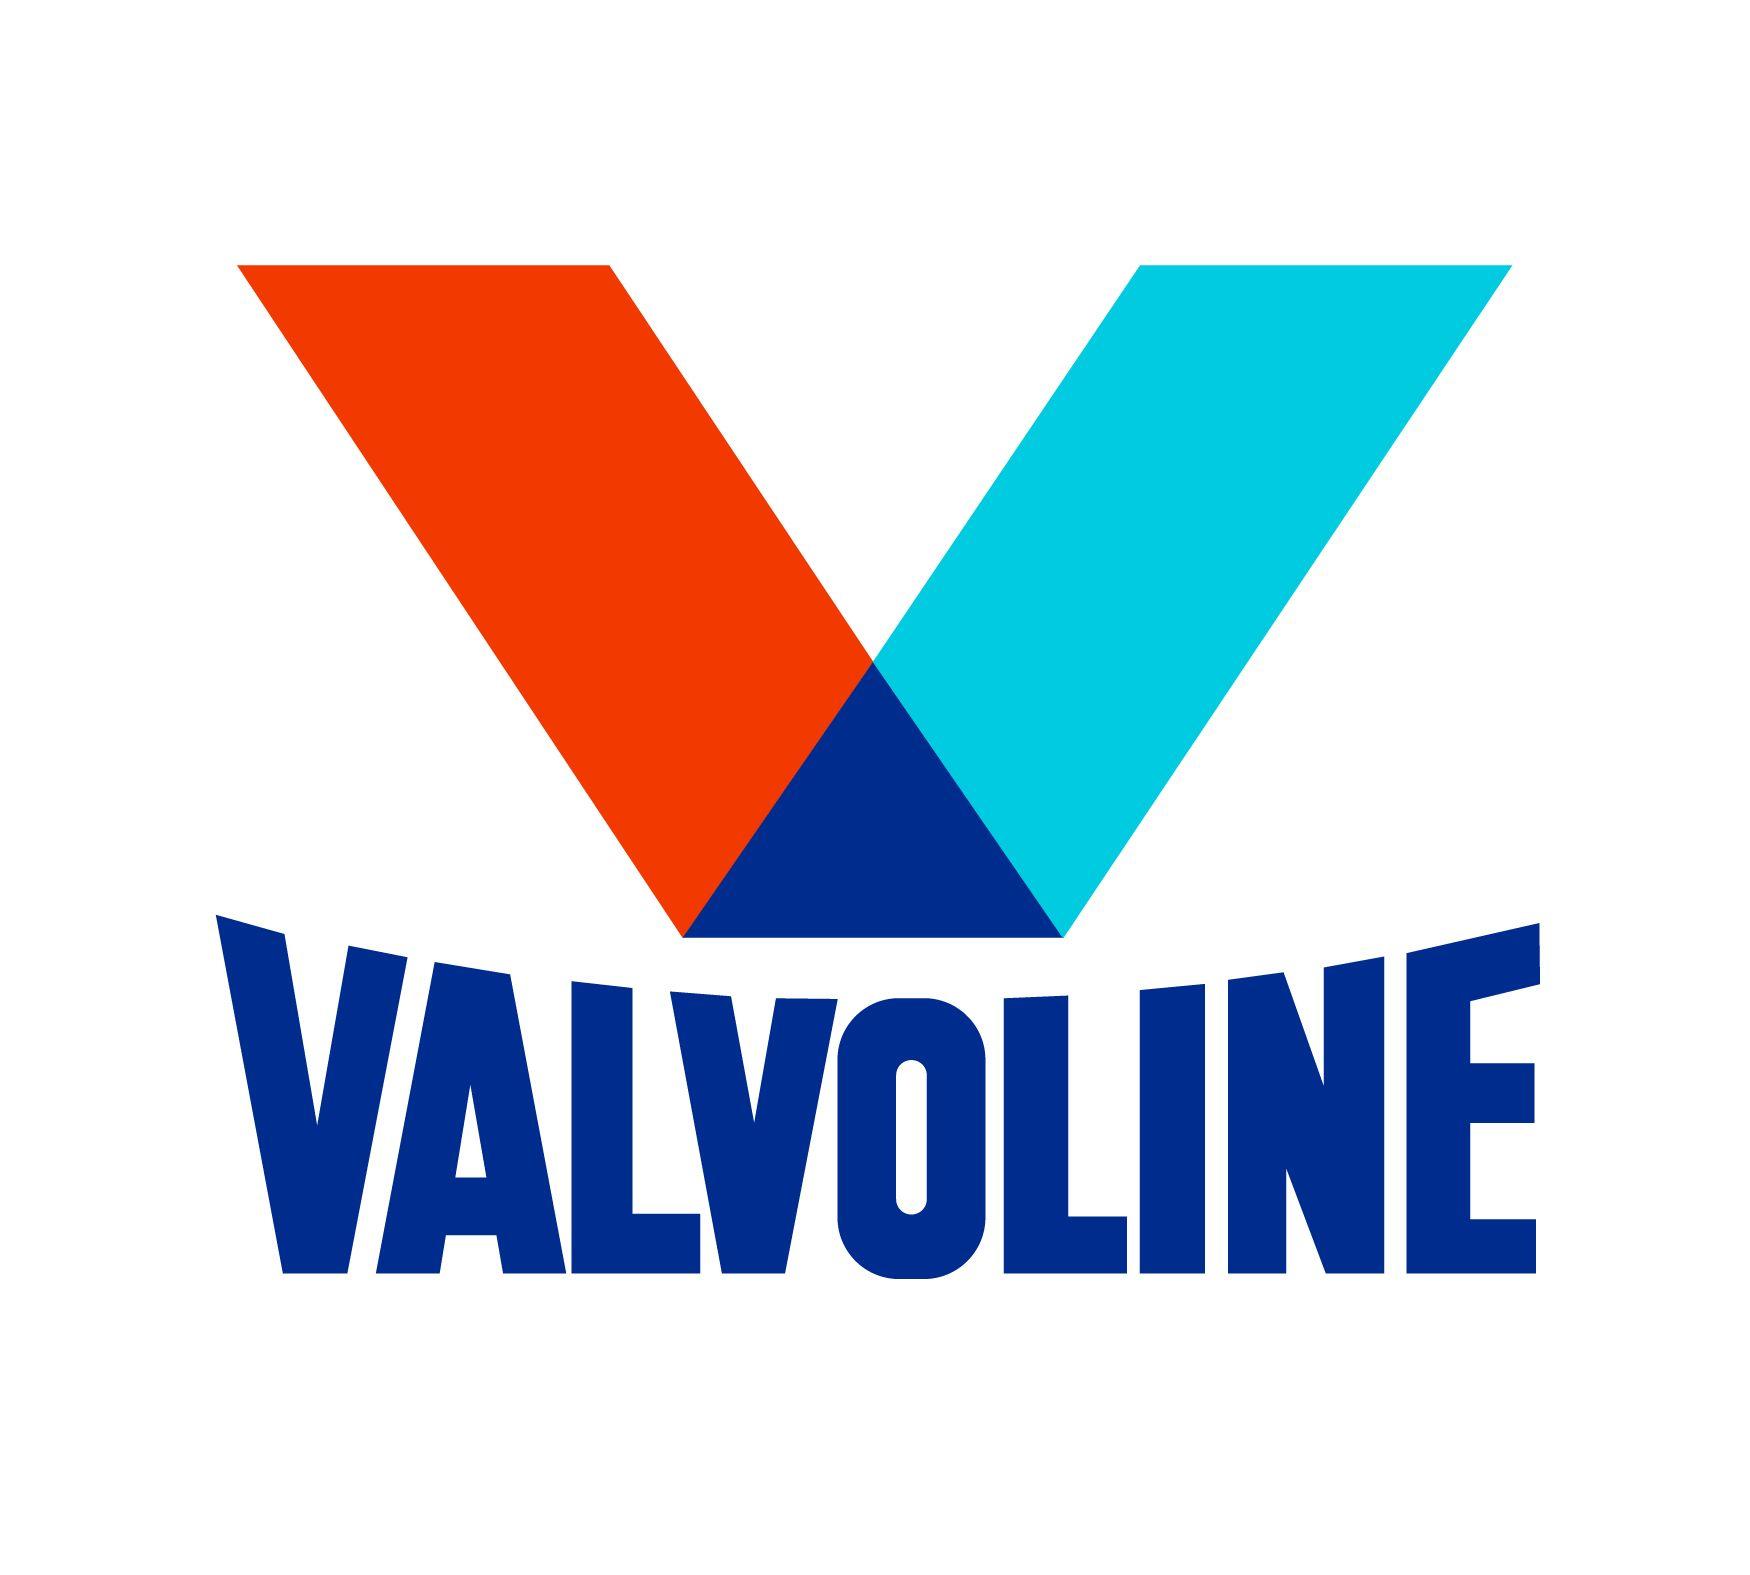 Valvoline Logo - Valvoline not original